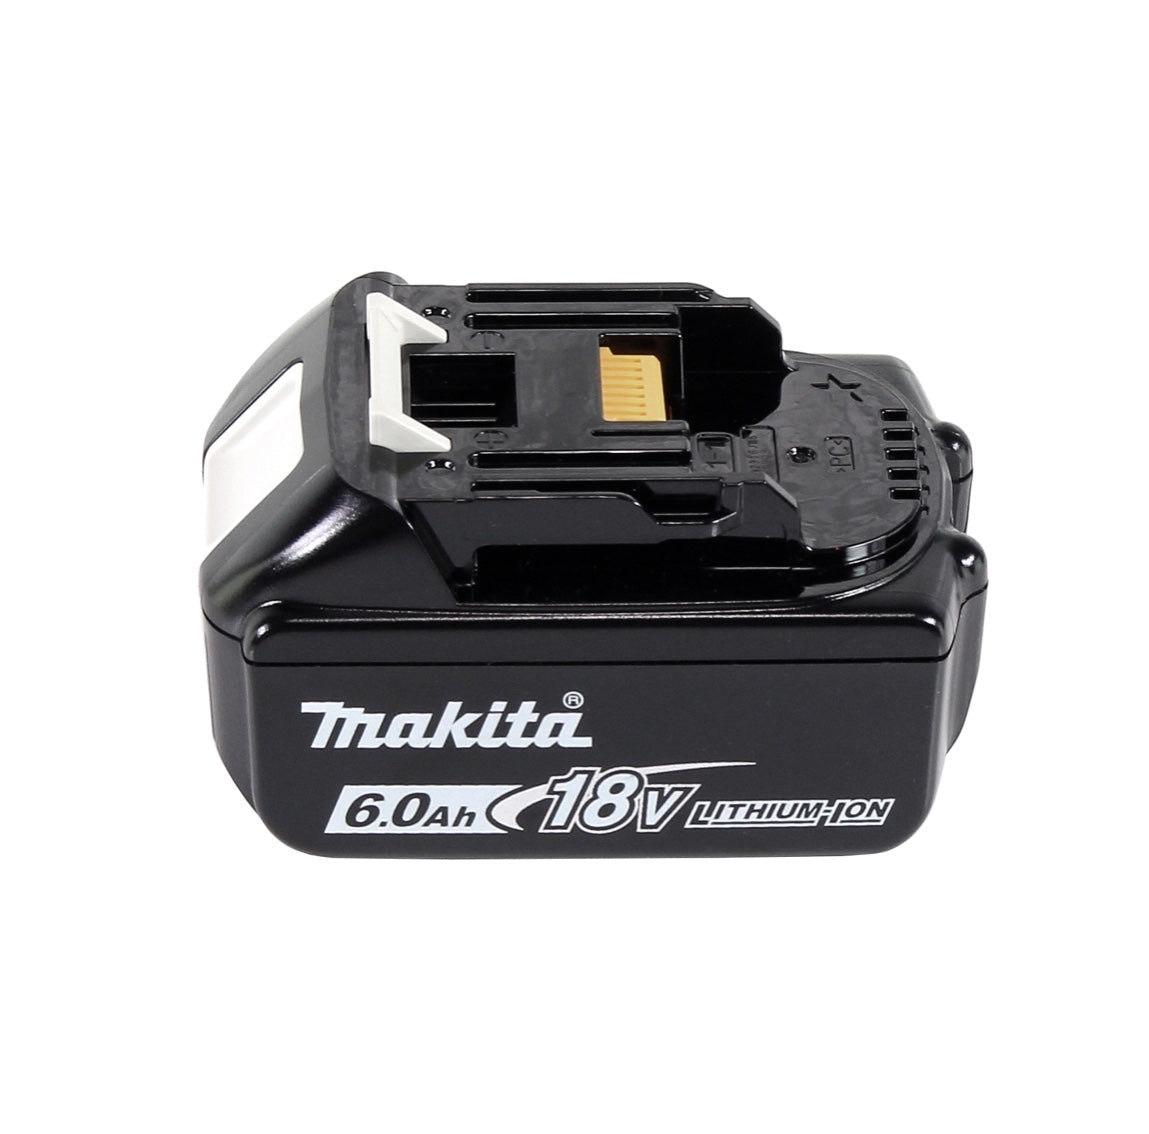 Makita DEADML 815 G1 LED Akku Handleuchte 14,4 - 18 V 160 lm + 1x Akku 6,0 Ah - ohne Ladegerät